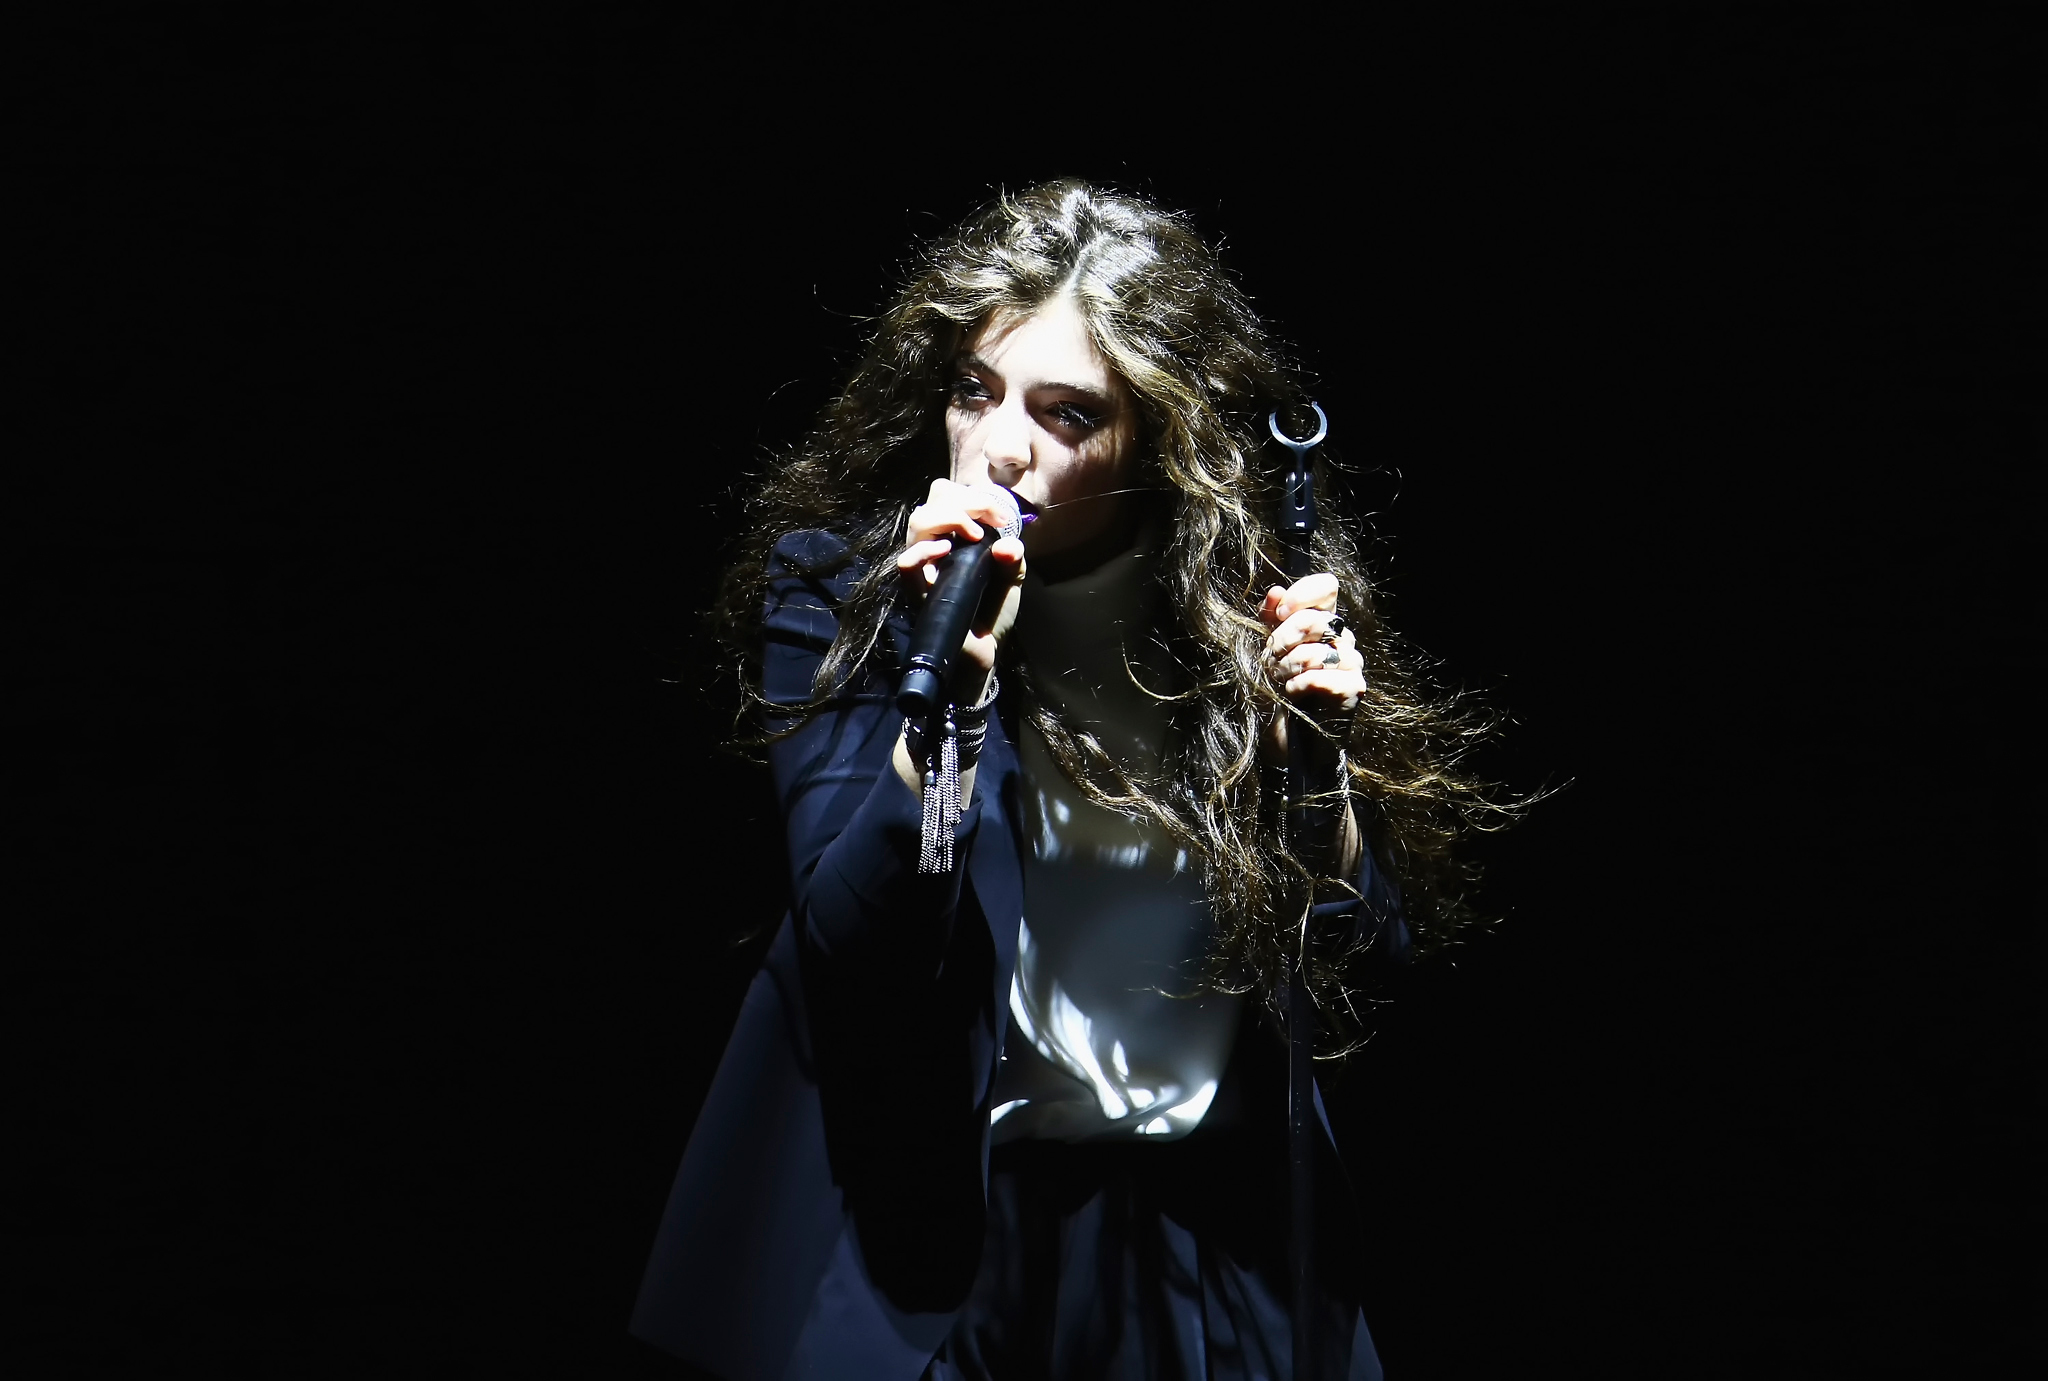 Wallpaper, black, singer, Lorde, guitarist, singing, entertainment, light, stage, darkness, concert, performance art, performing arts 2048x1381